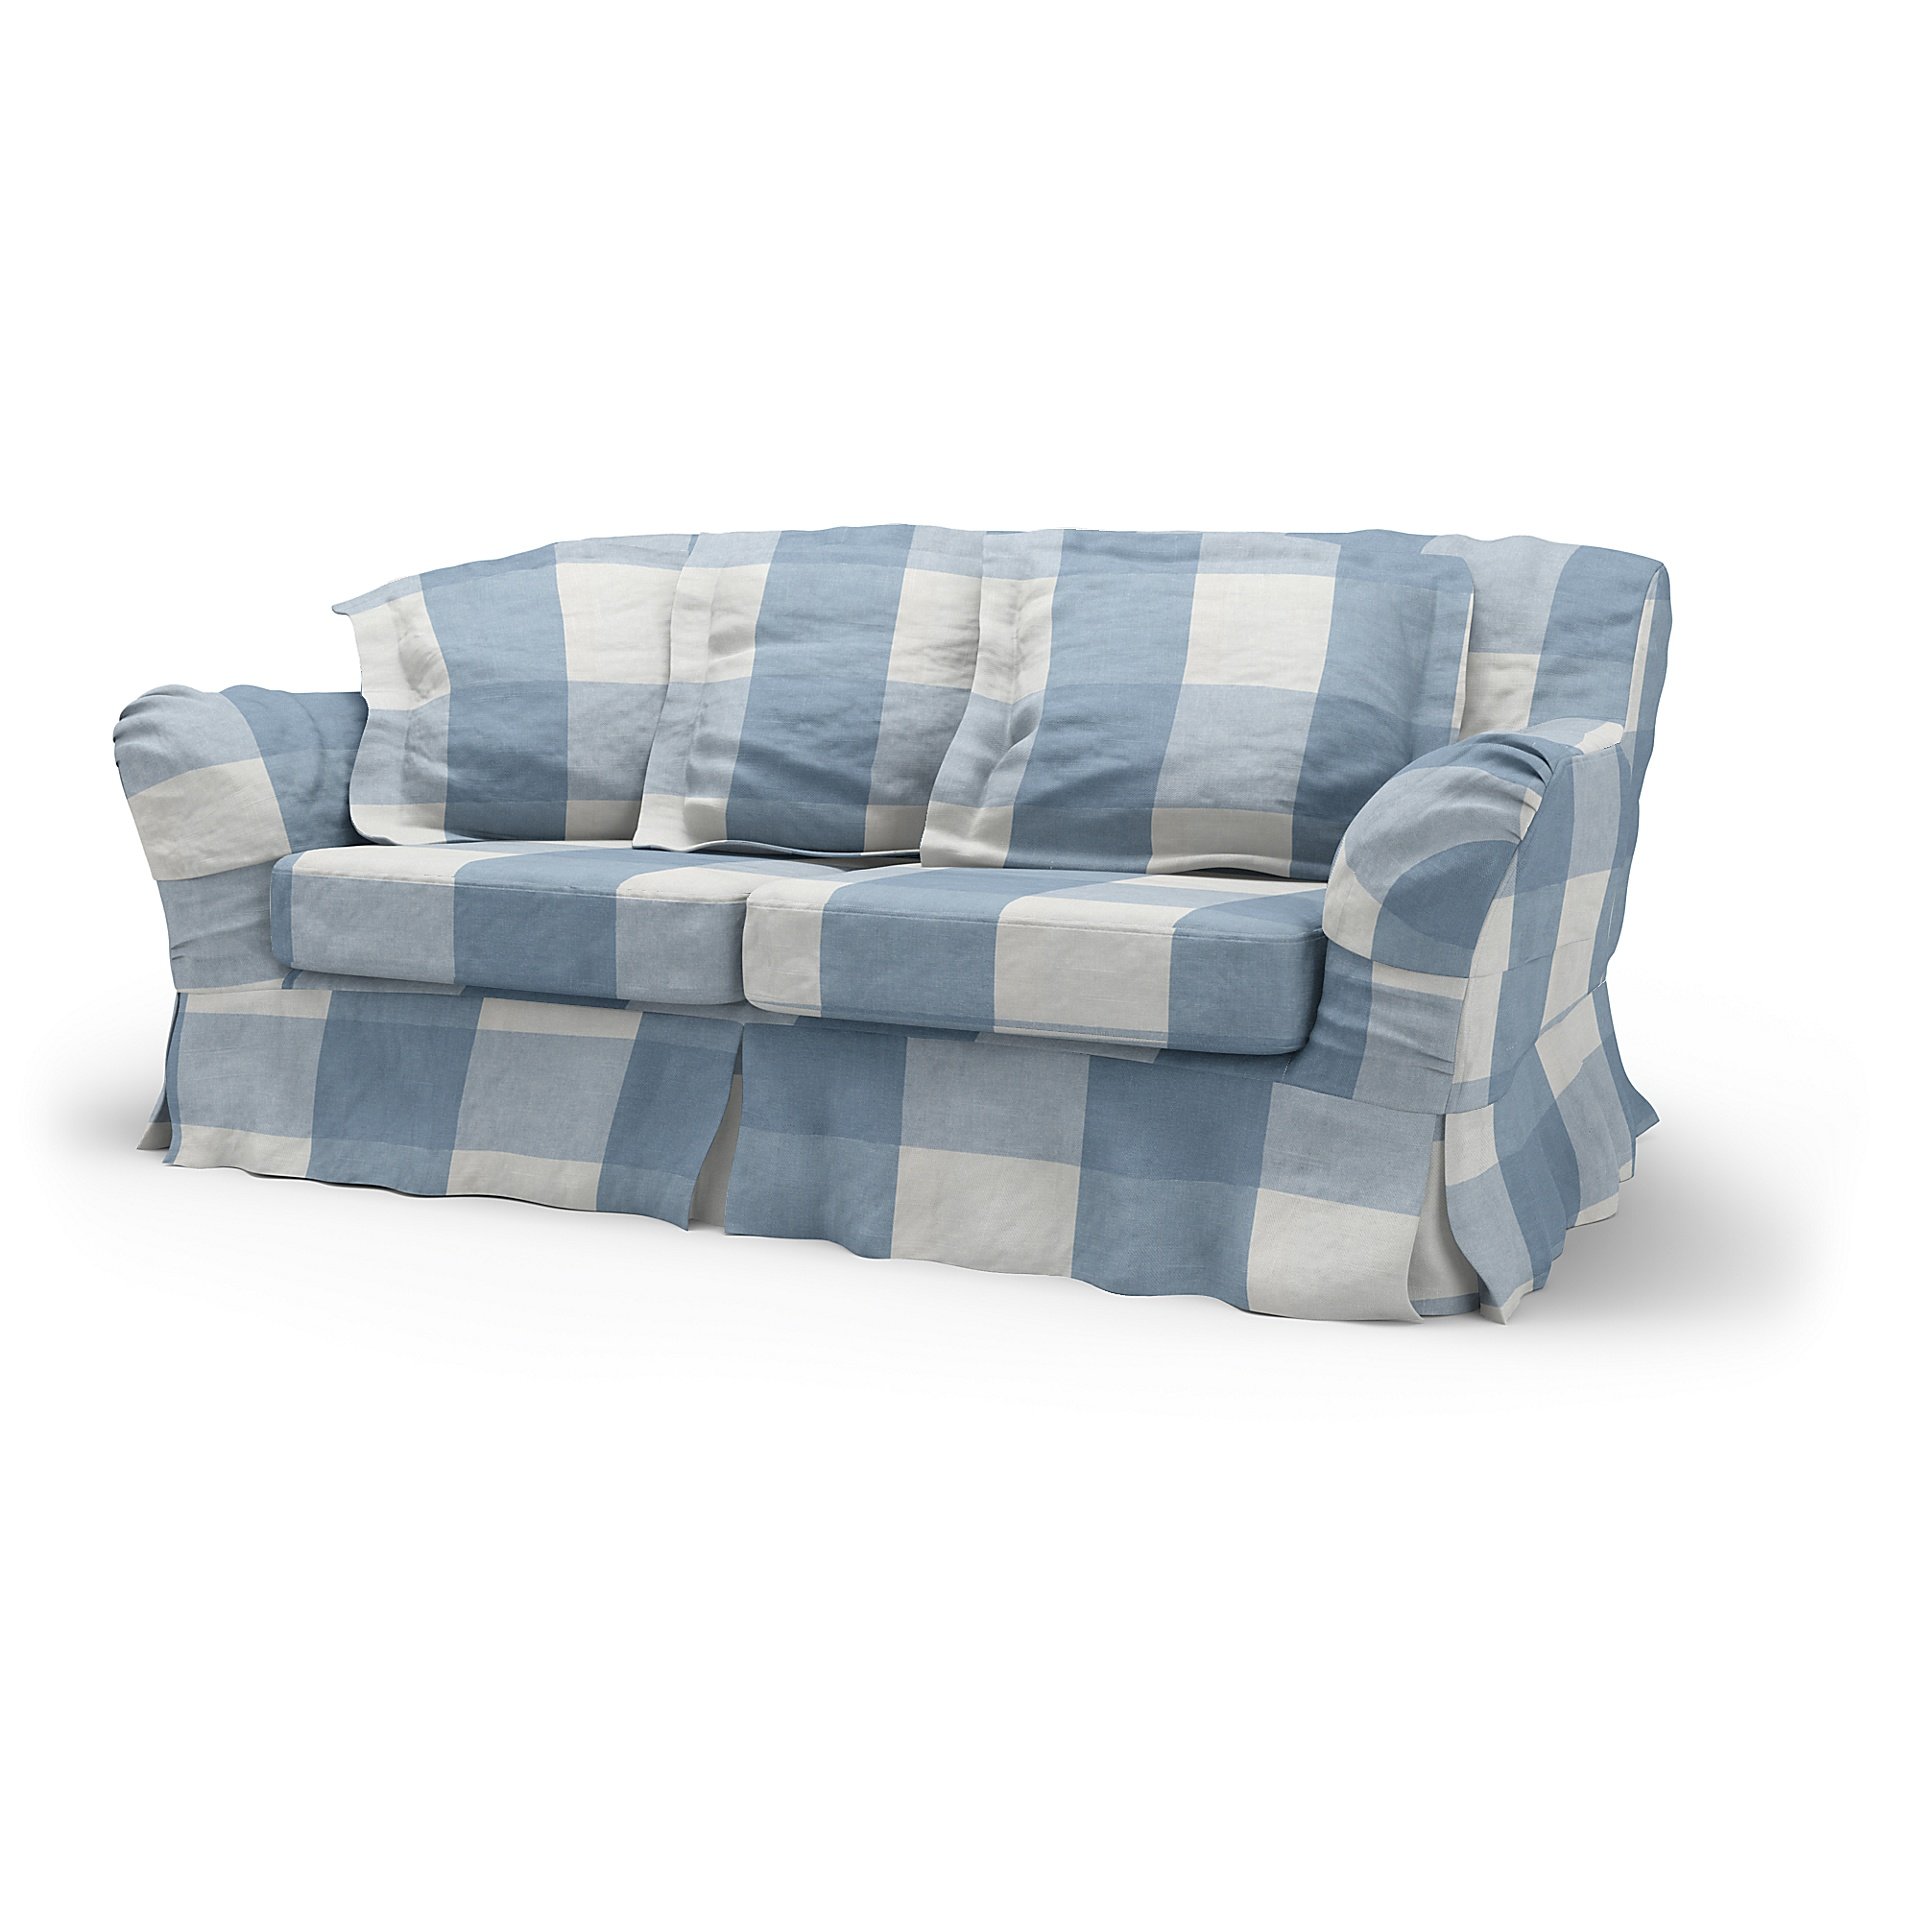 IKEA - Tomelilla 2 Seater Sofa Cover, Sky Blue, Linen - Bemz